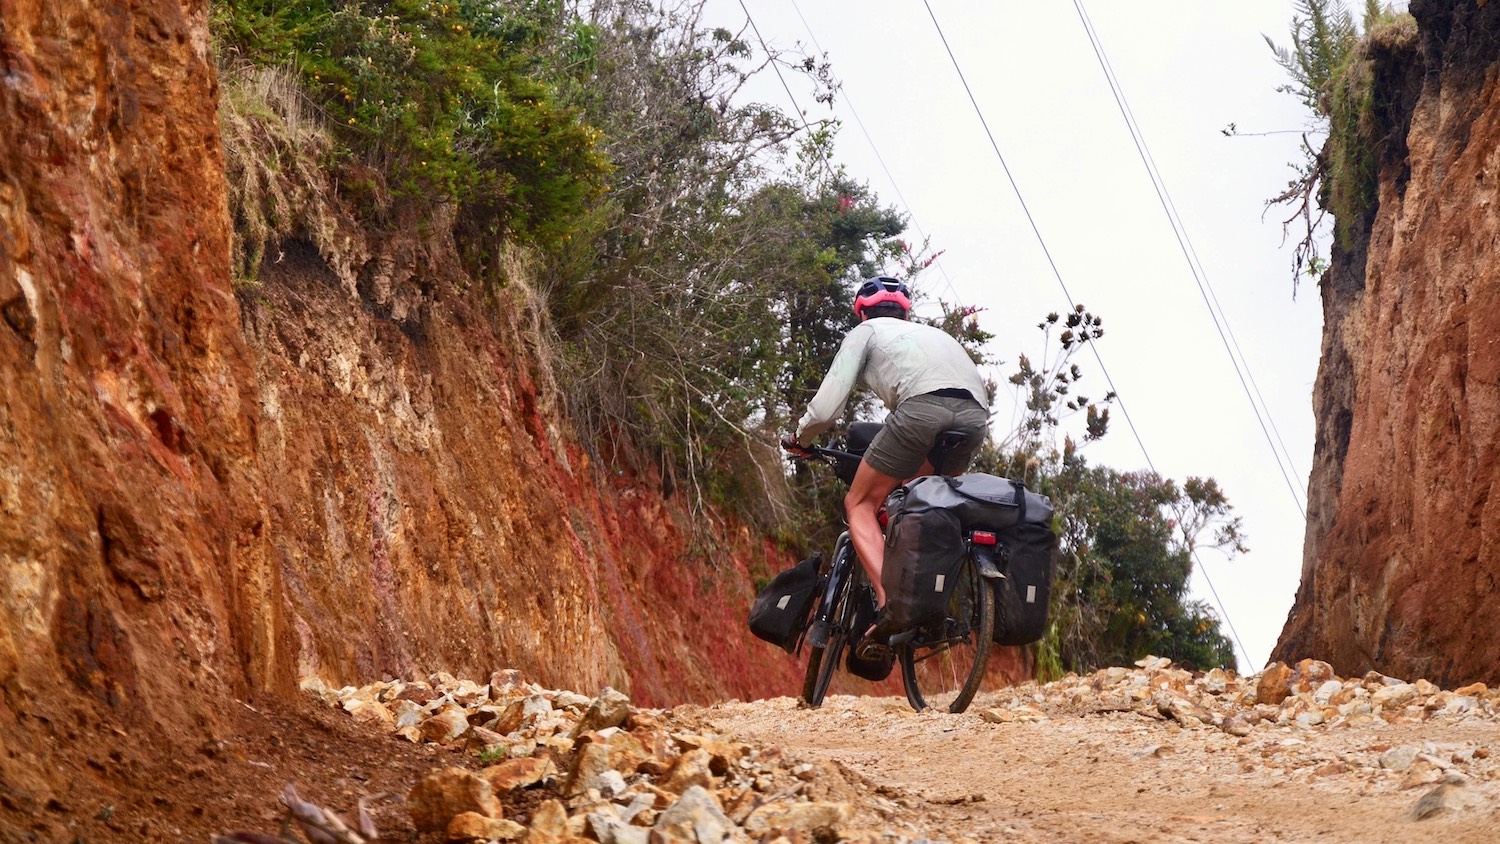 Trans Ecuador Mountain Bike Route